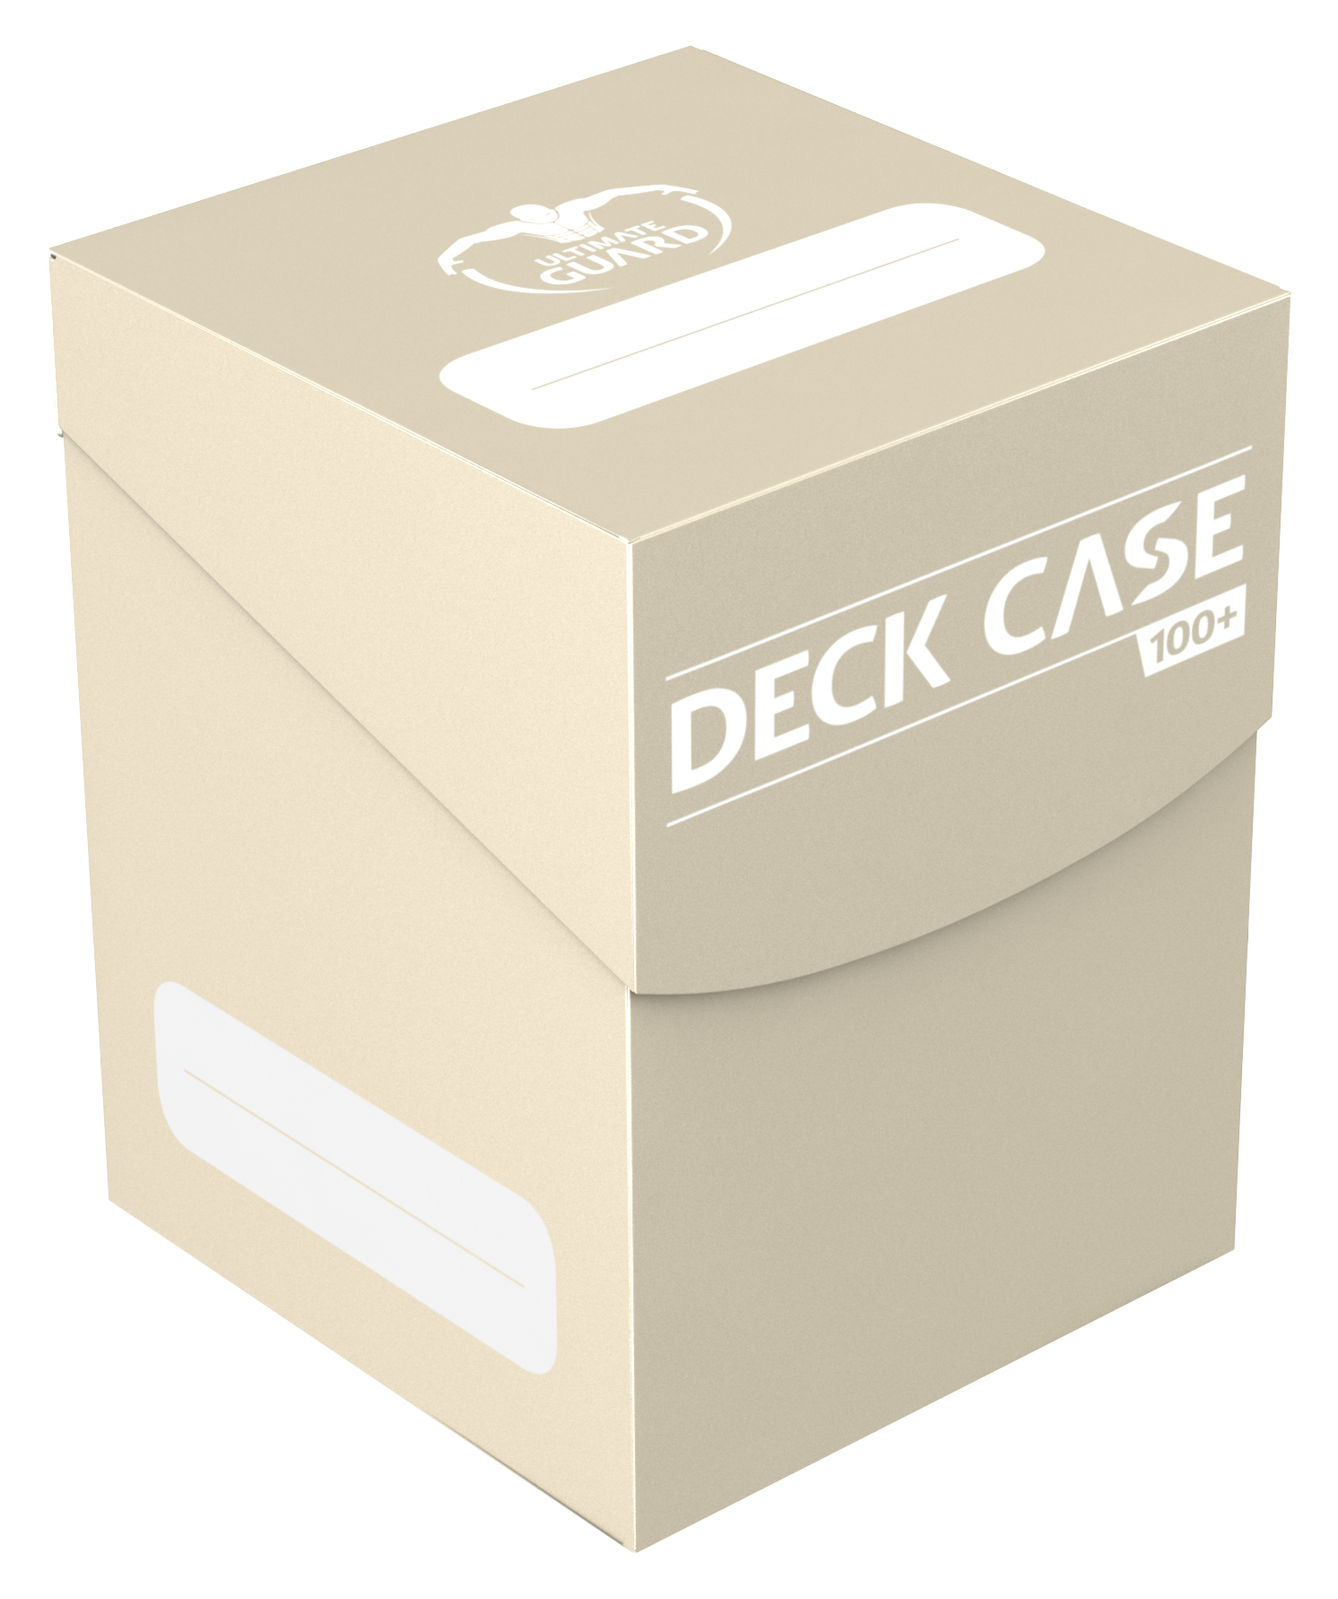 Standard Size SAND Deck Box Ultimate Guard Deck Case 100